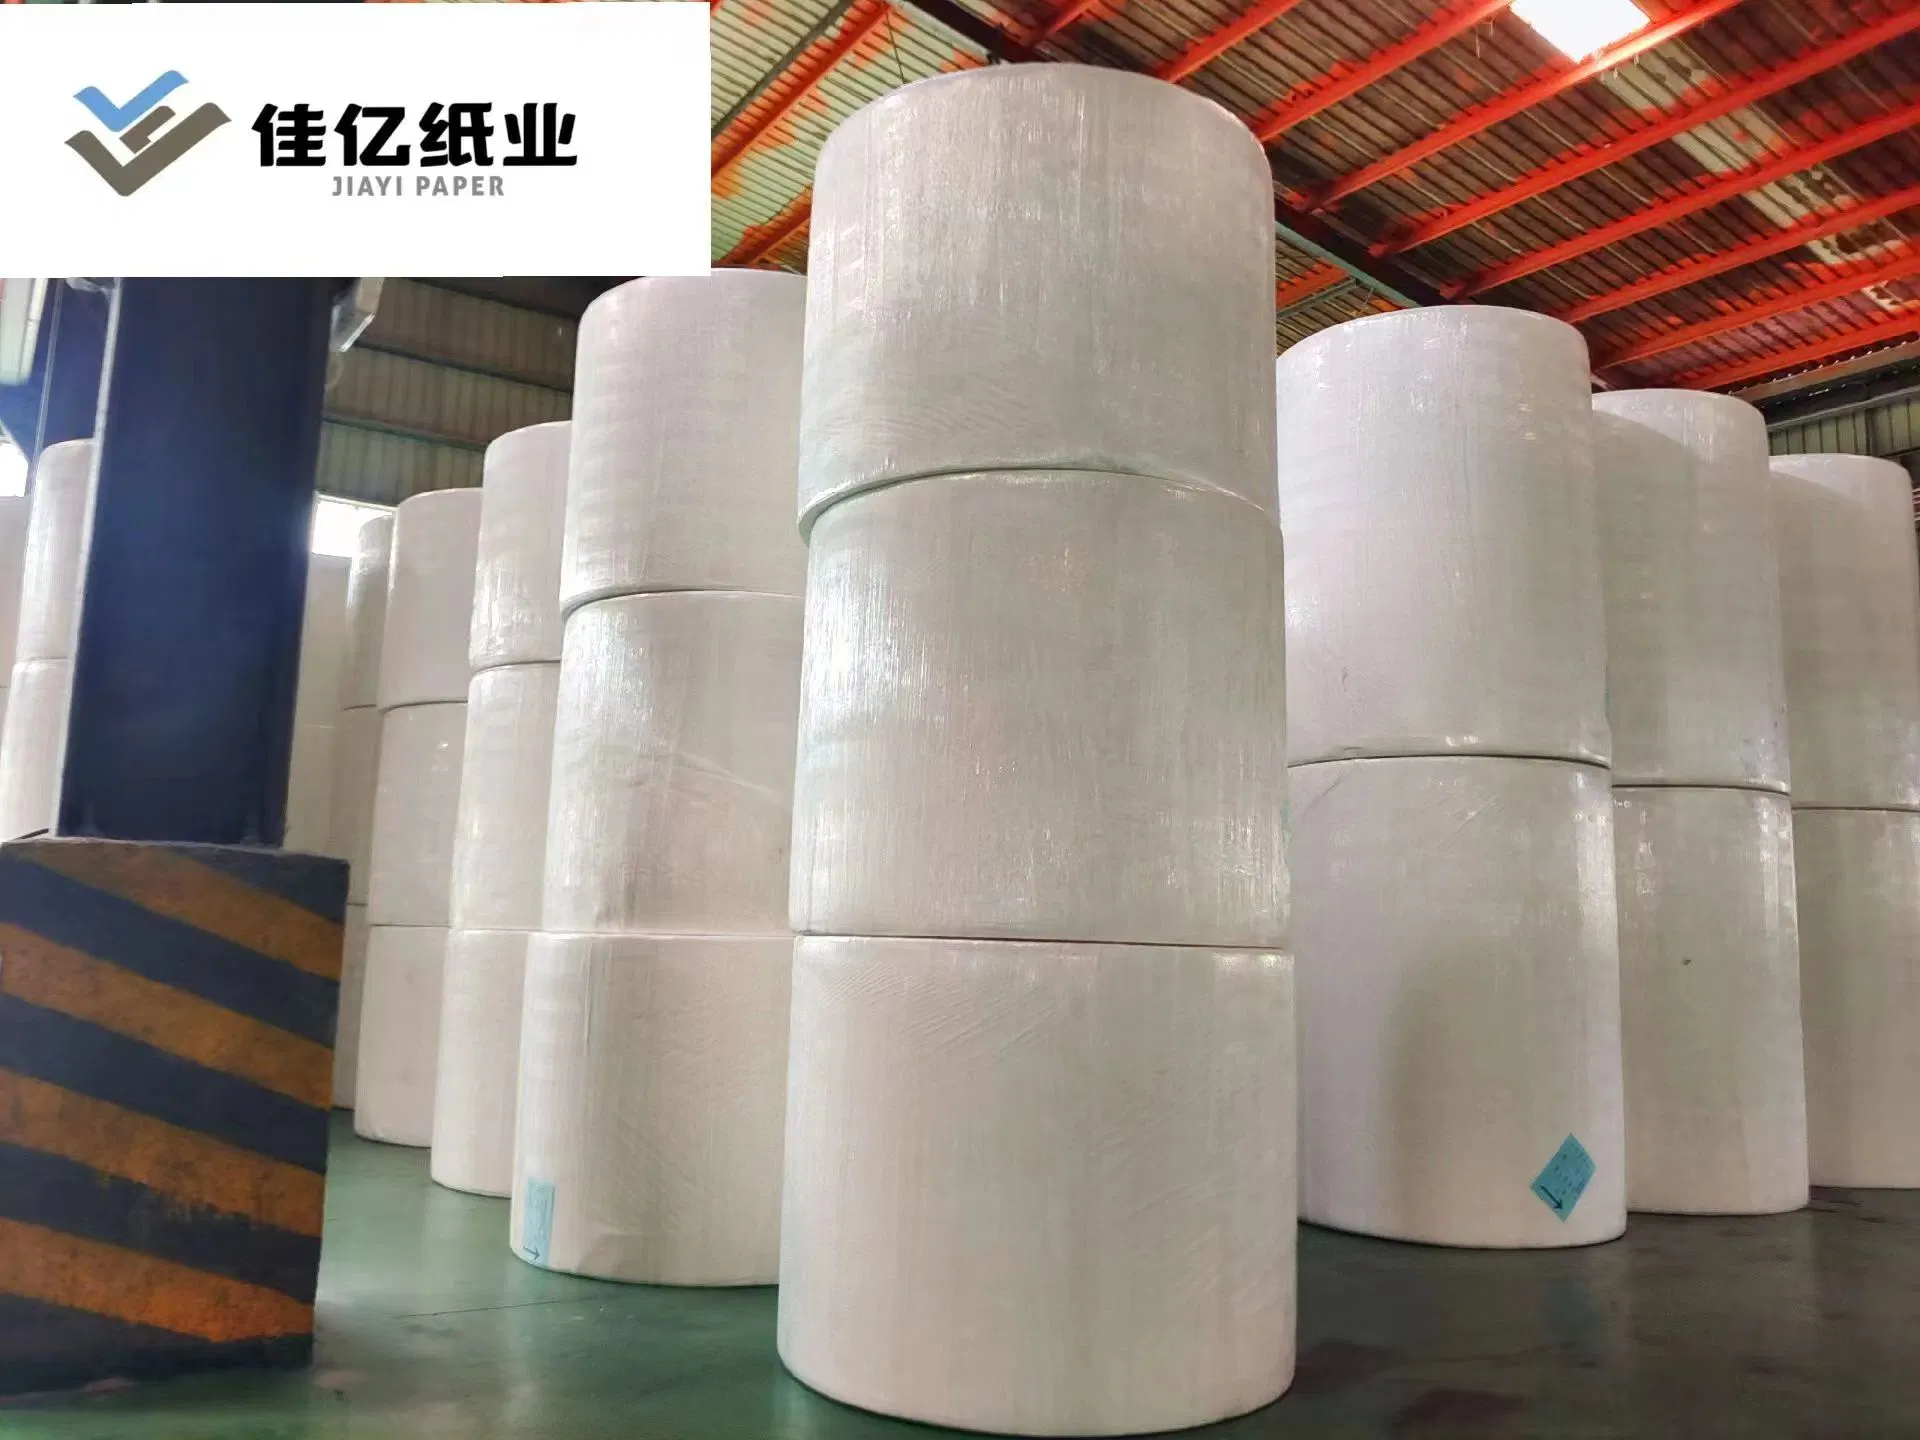 Jiayi materia prima para la elaboración de servilleta de papel toalla de papel higiénico abigarrada servilleta